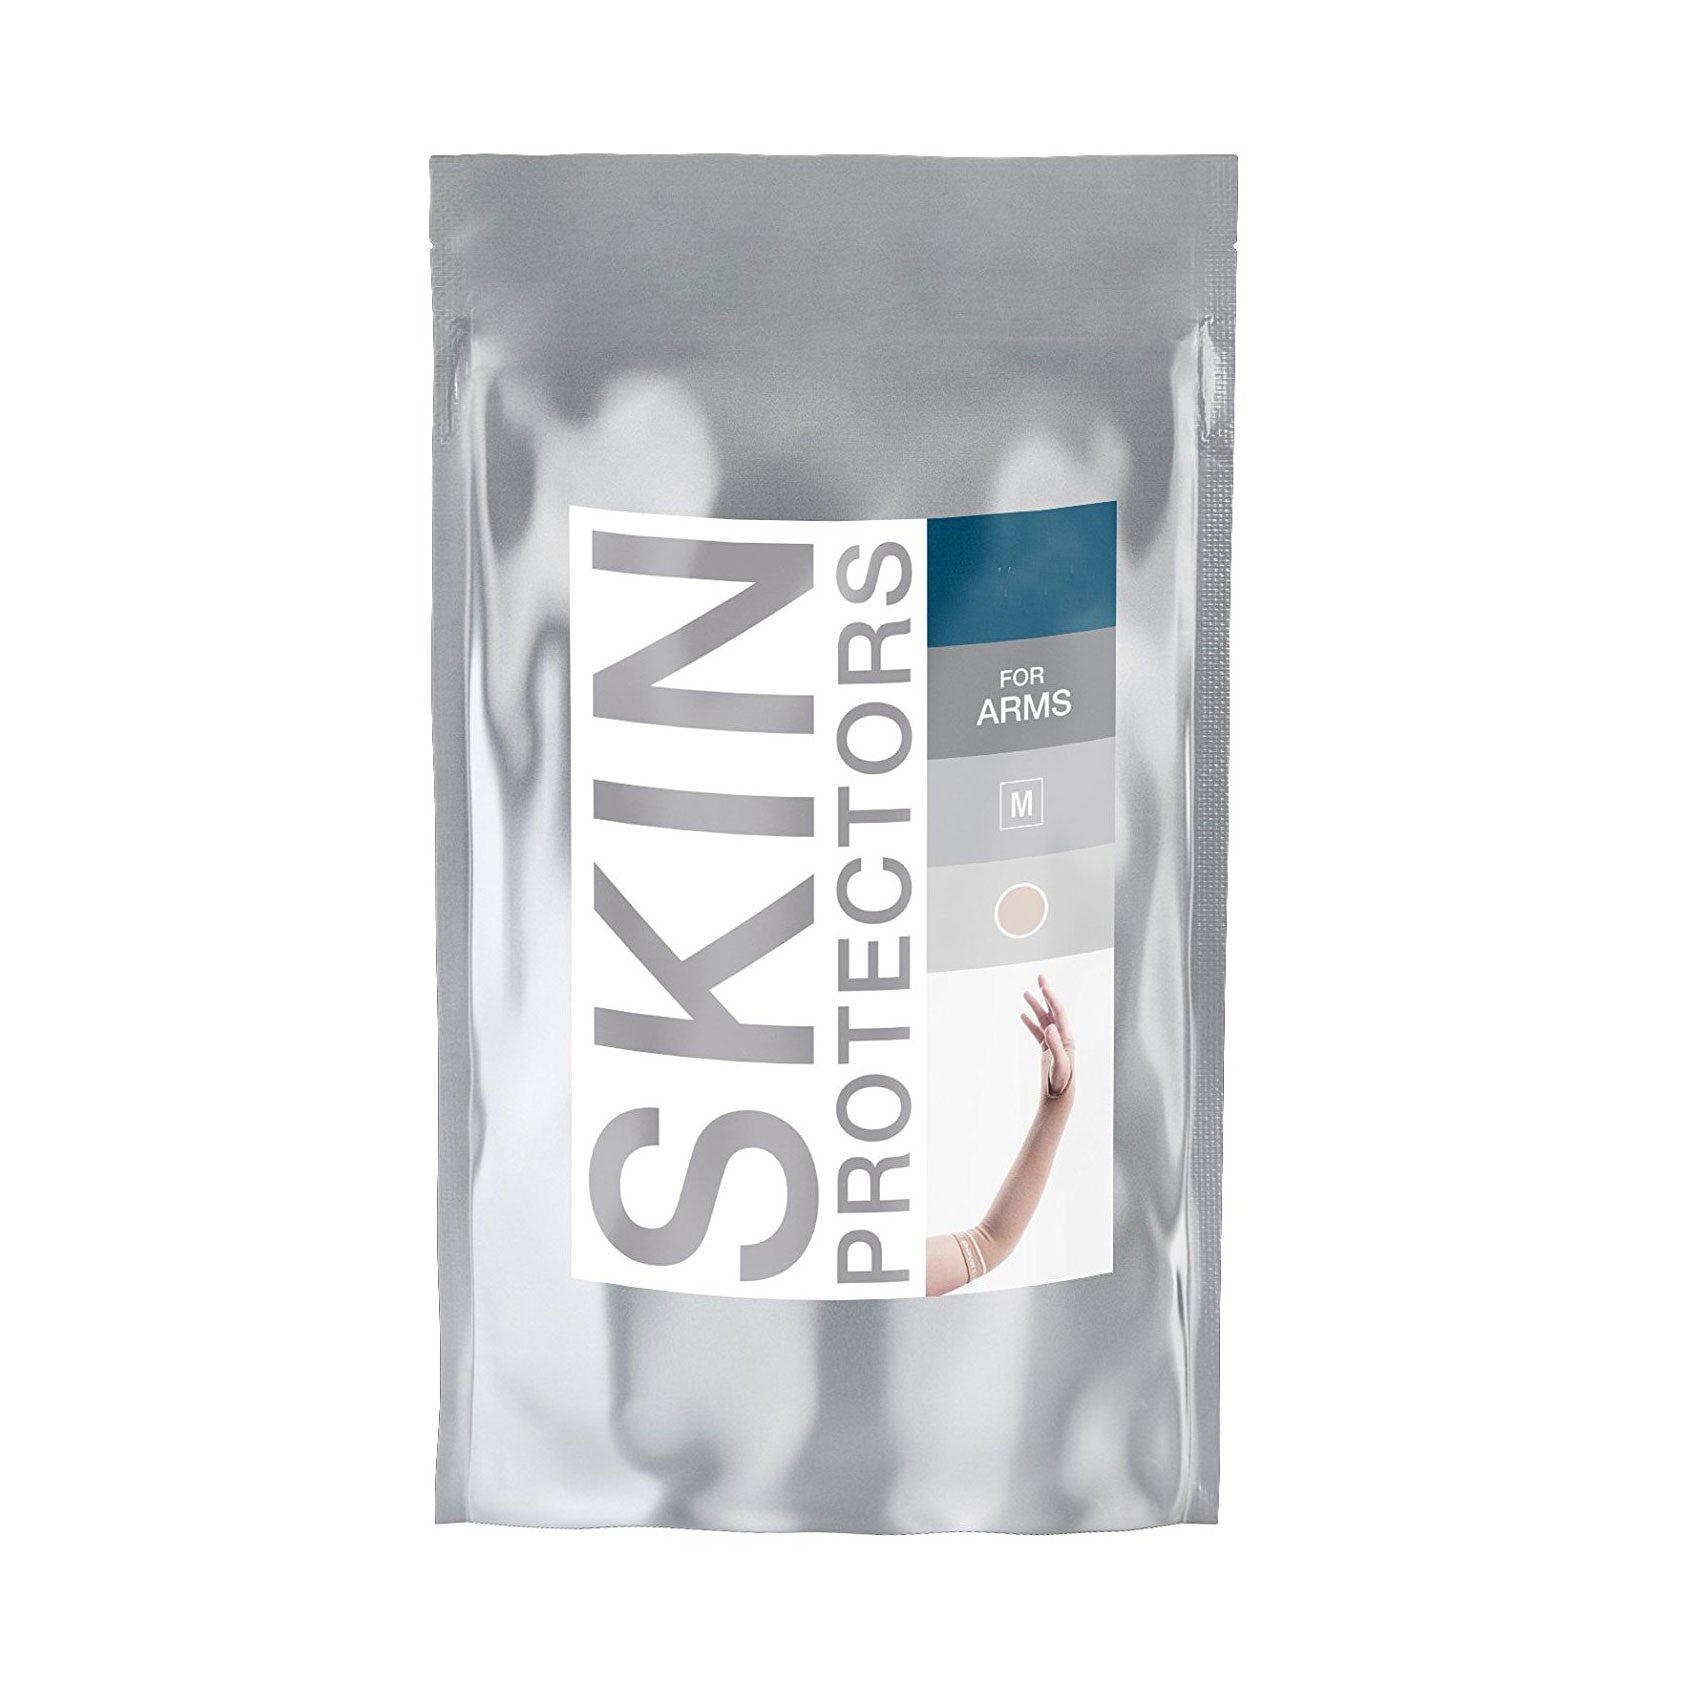 Skin Protectors For Arms - Tan, Pair (2pc)